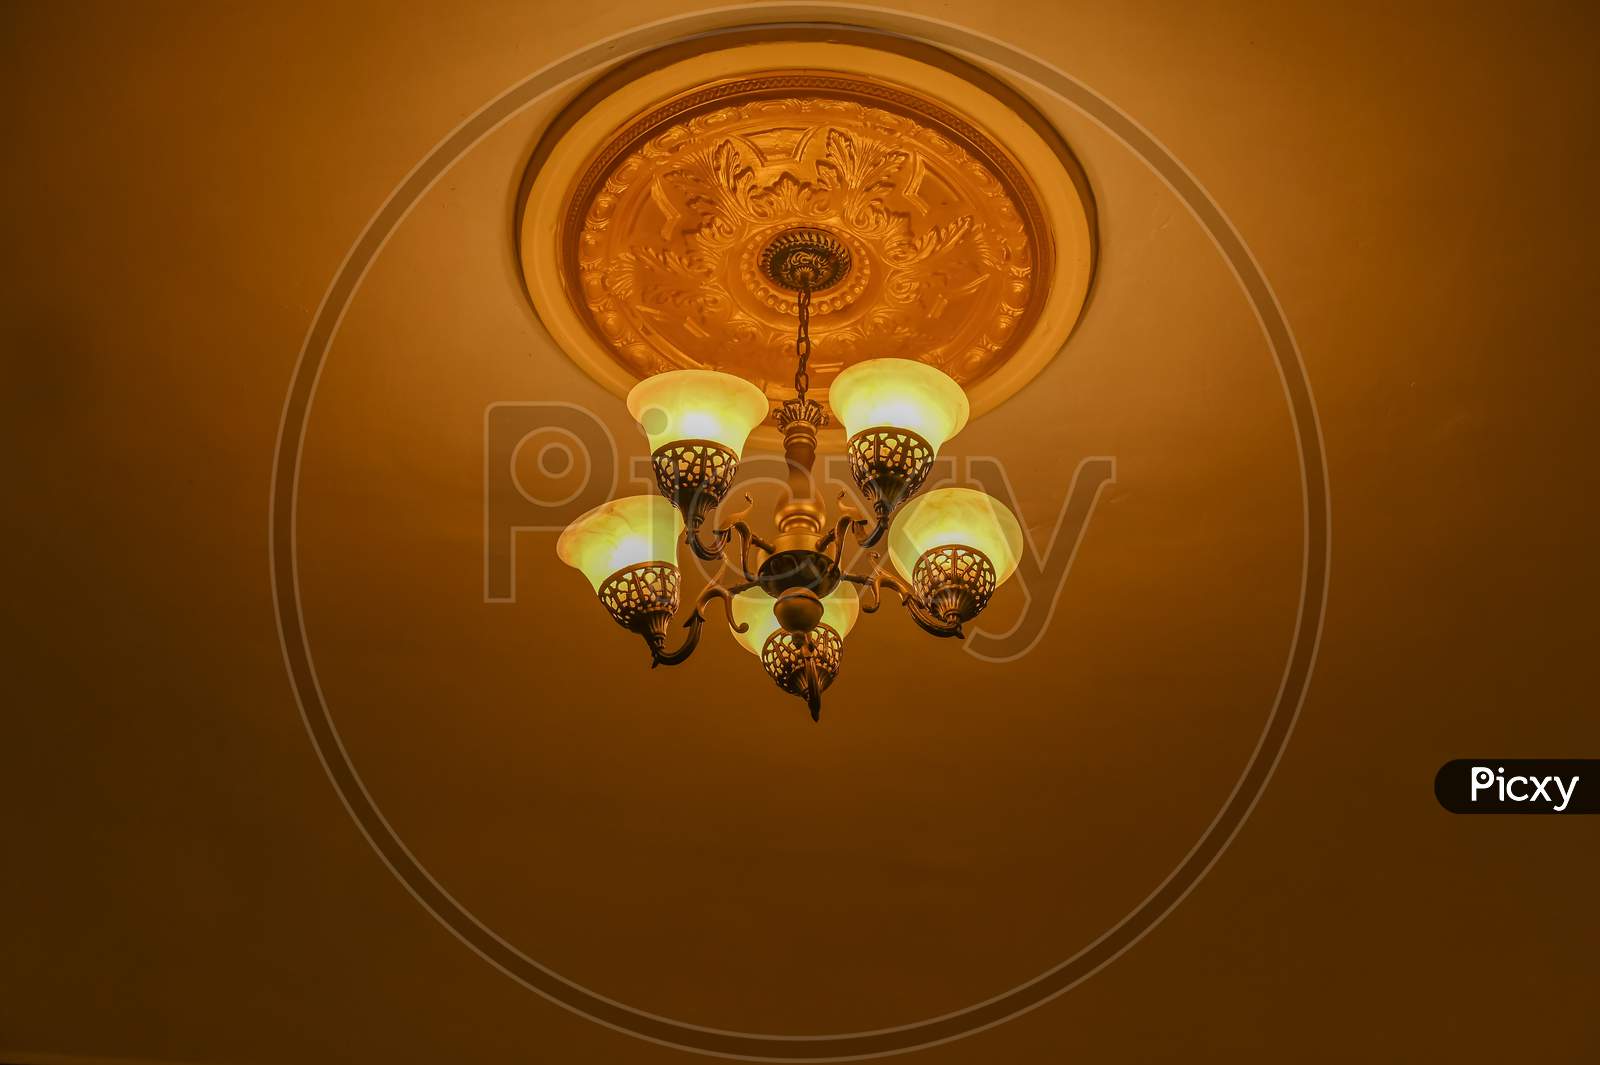 Ceiling Chandelier With Five Lights In Vintage Design.